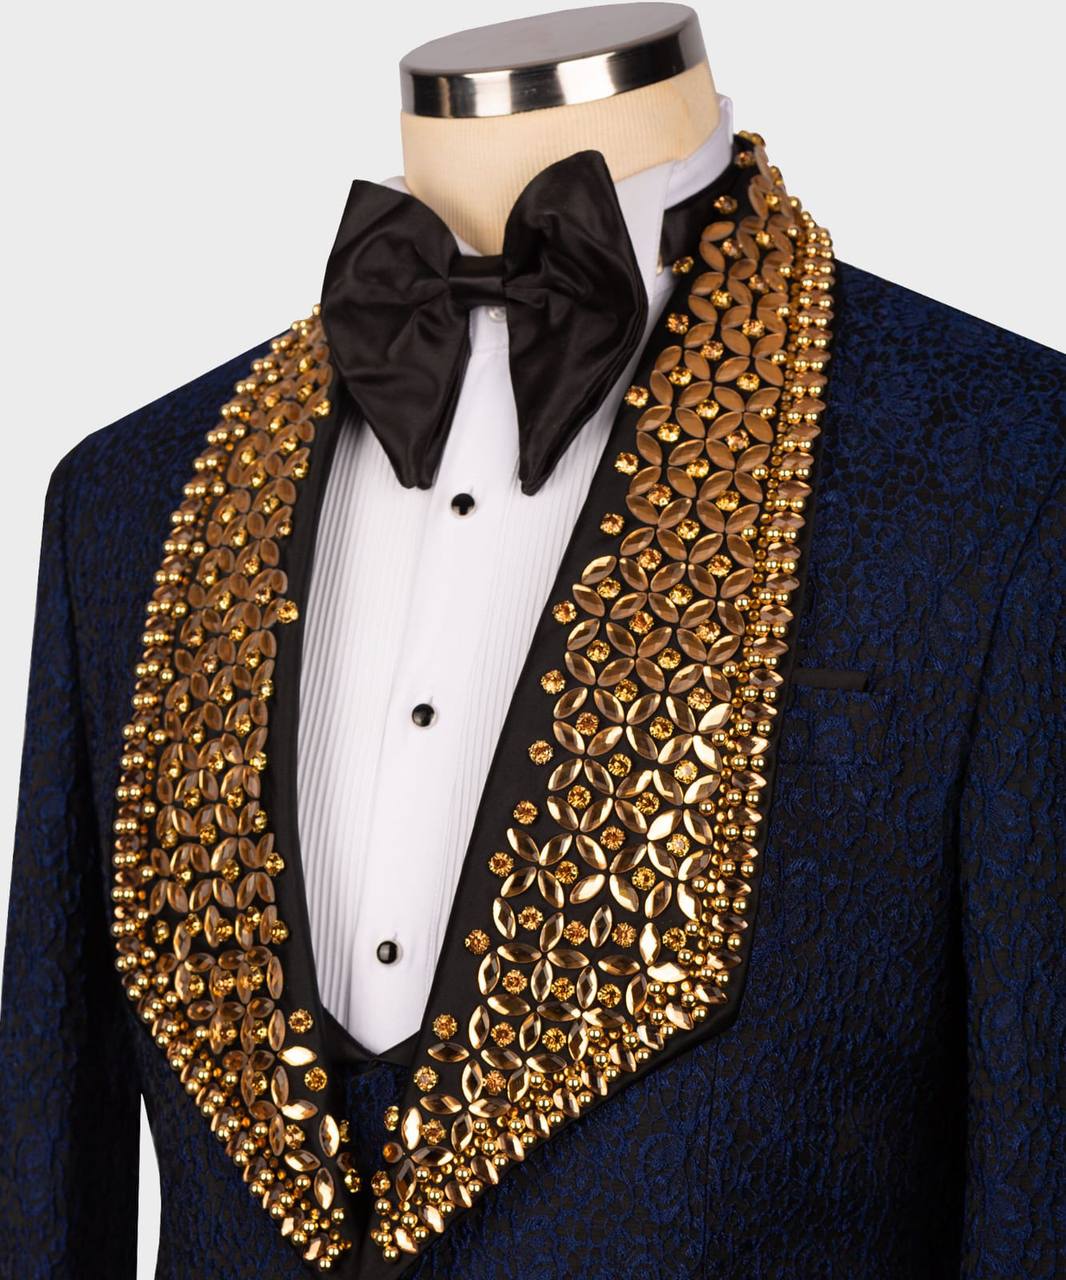 Men's 3 Piece Stone Stitched Navy/Gold Tuxedo